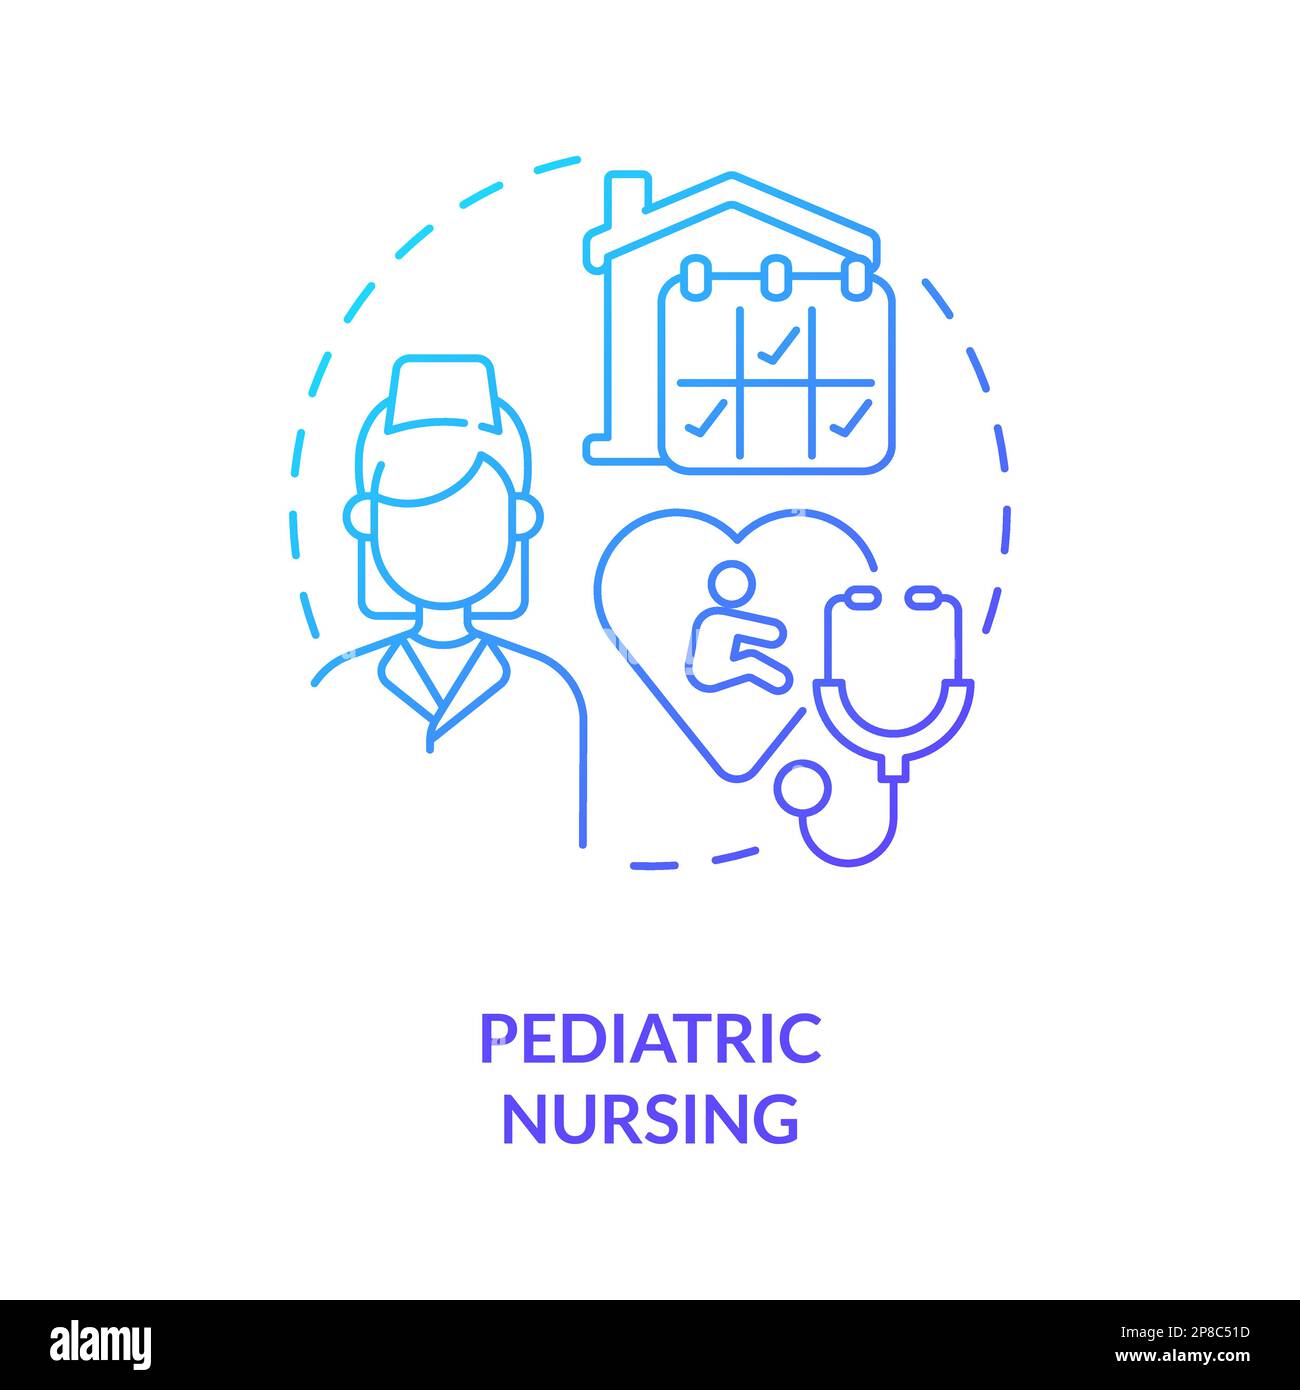 Pediatric nursing blue gradient concept icon Stock Vector